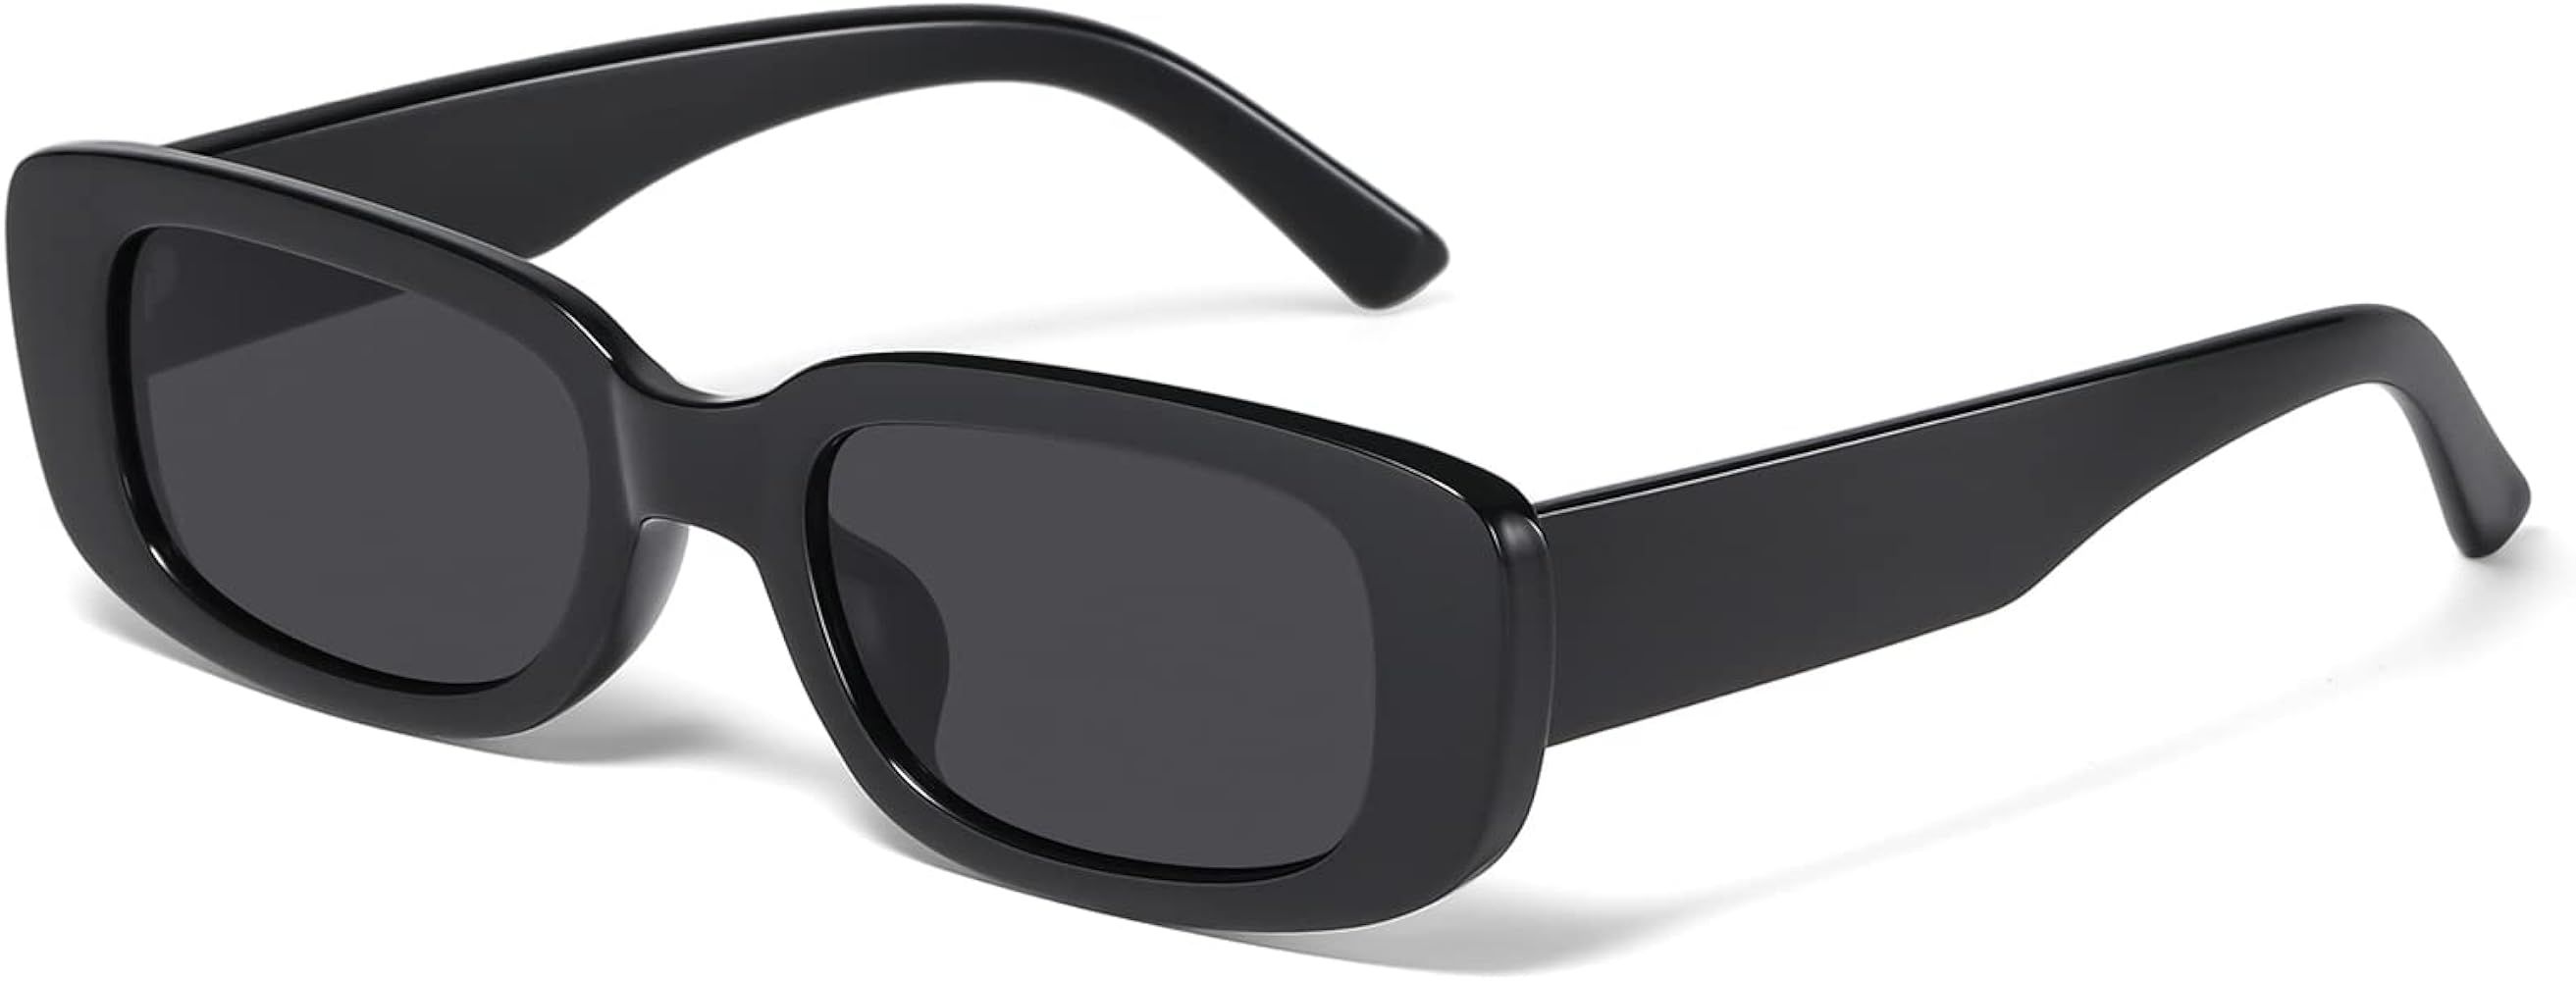 JASPIN Rectangle Sunglasses for Women Men Trendy Y2k Retro 90s Sun Glasses UV400 Protection Cool Square Frame | Amazon (US)